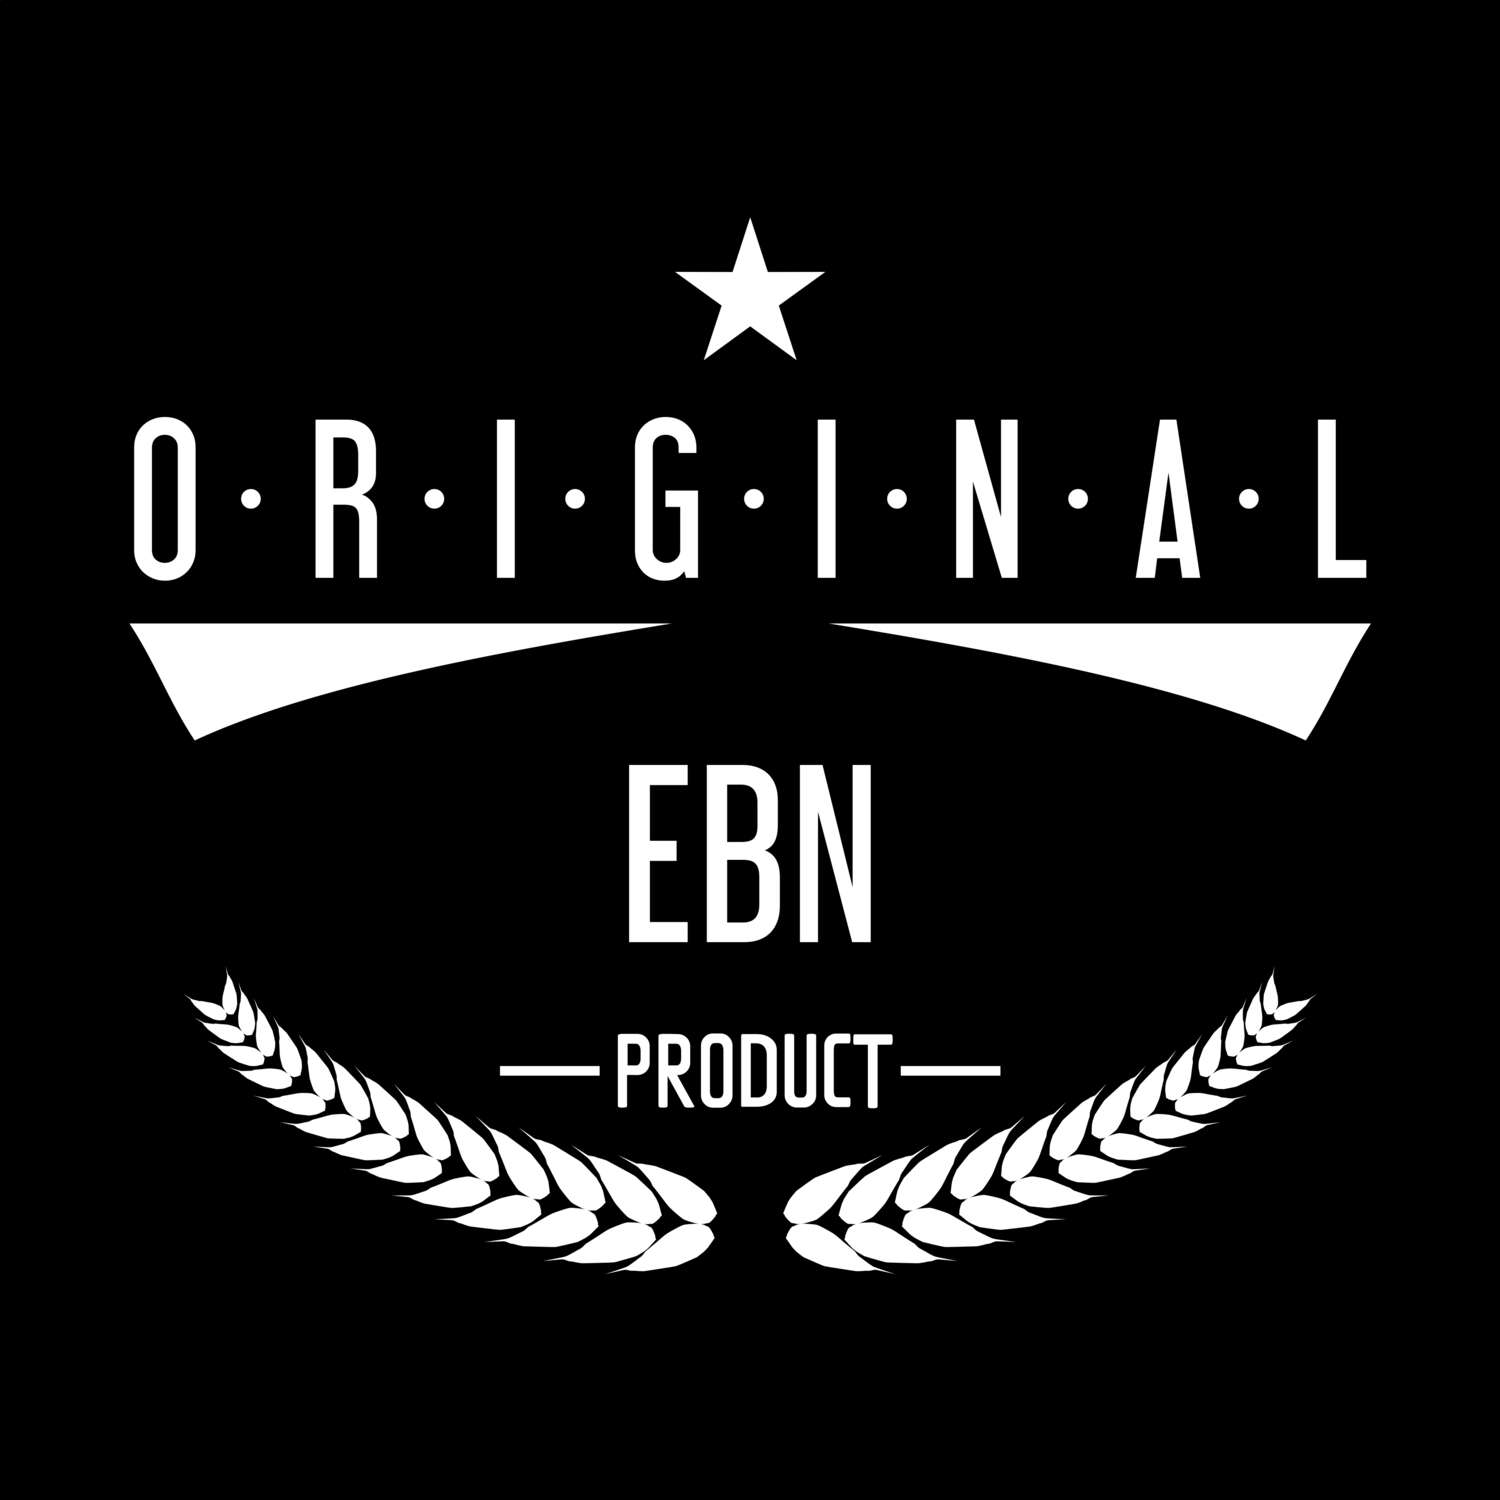 Ebn T-Shirt »Original Product«